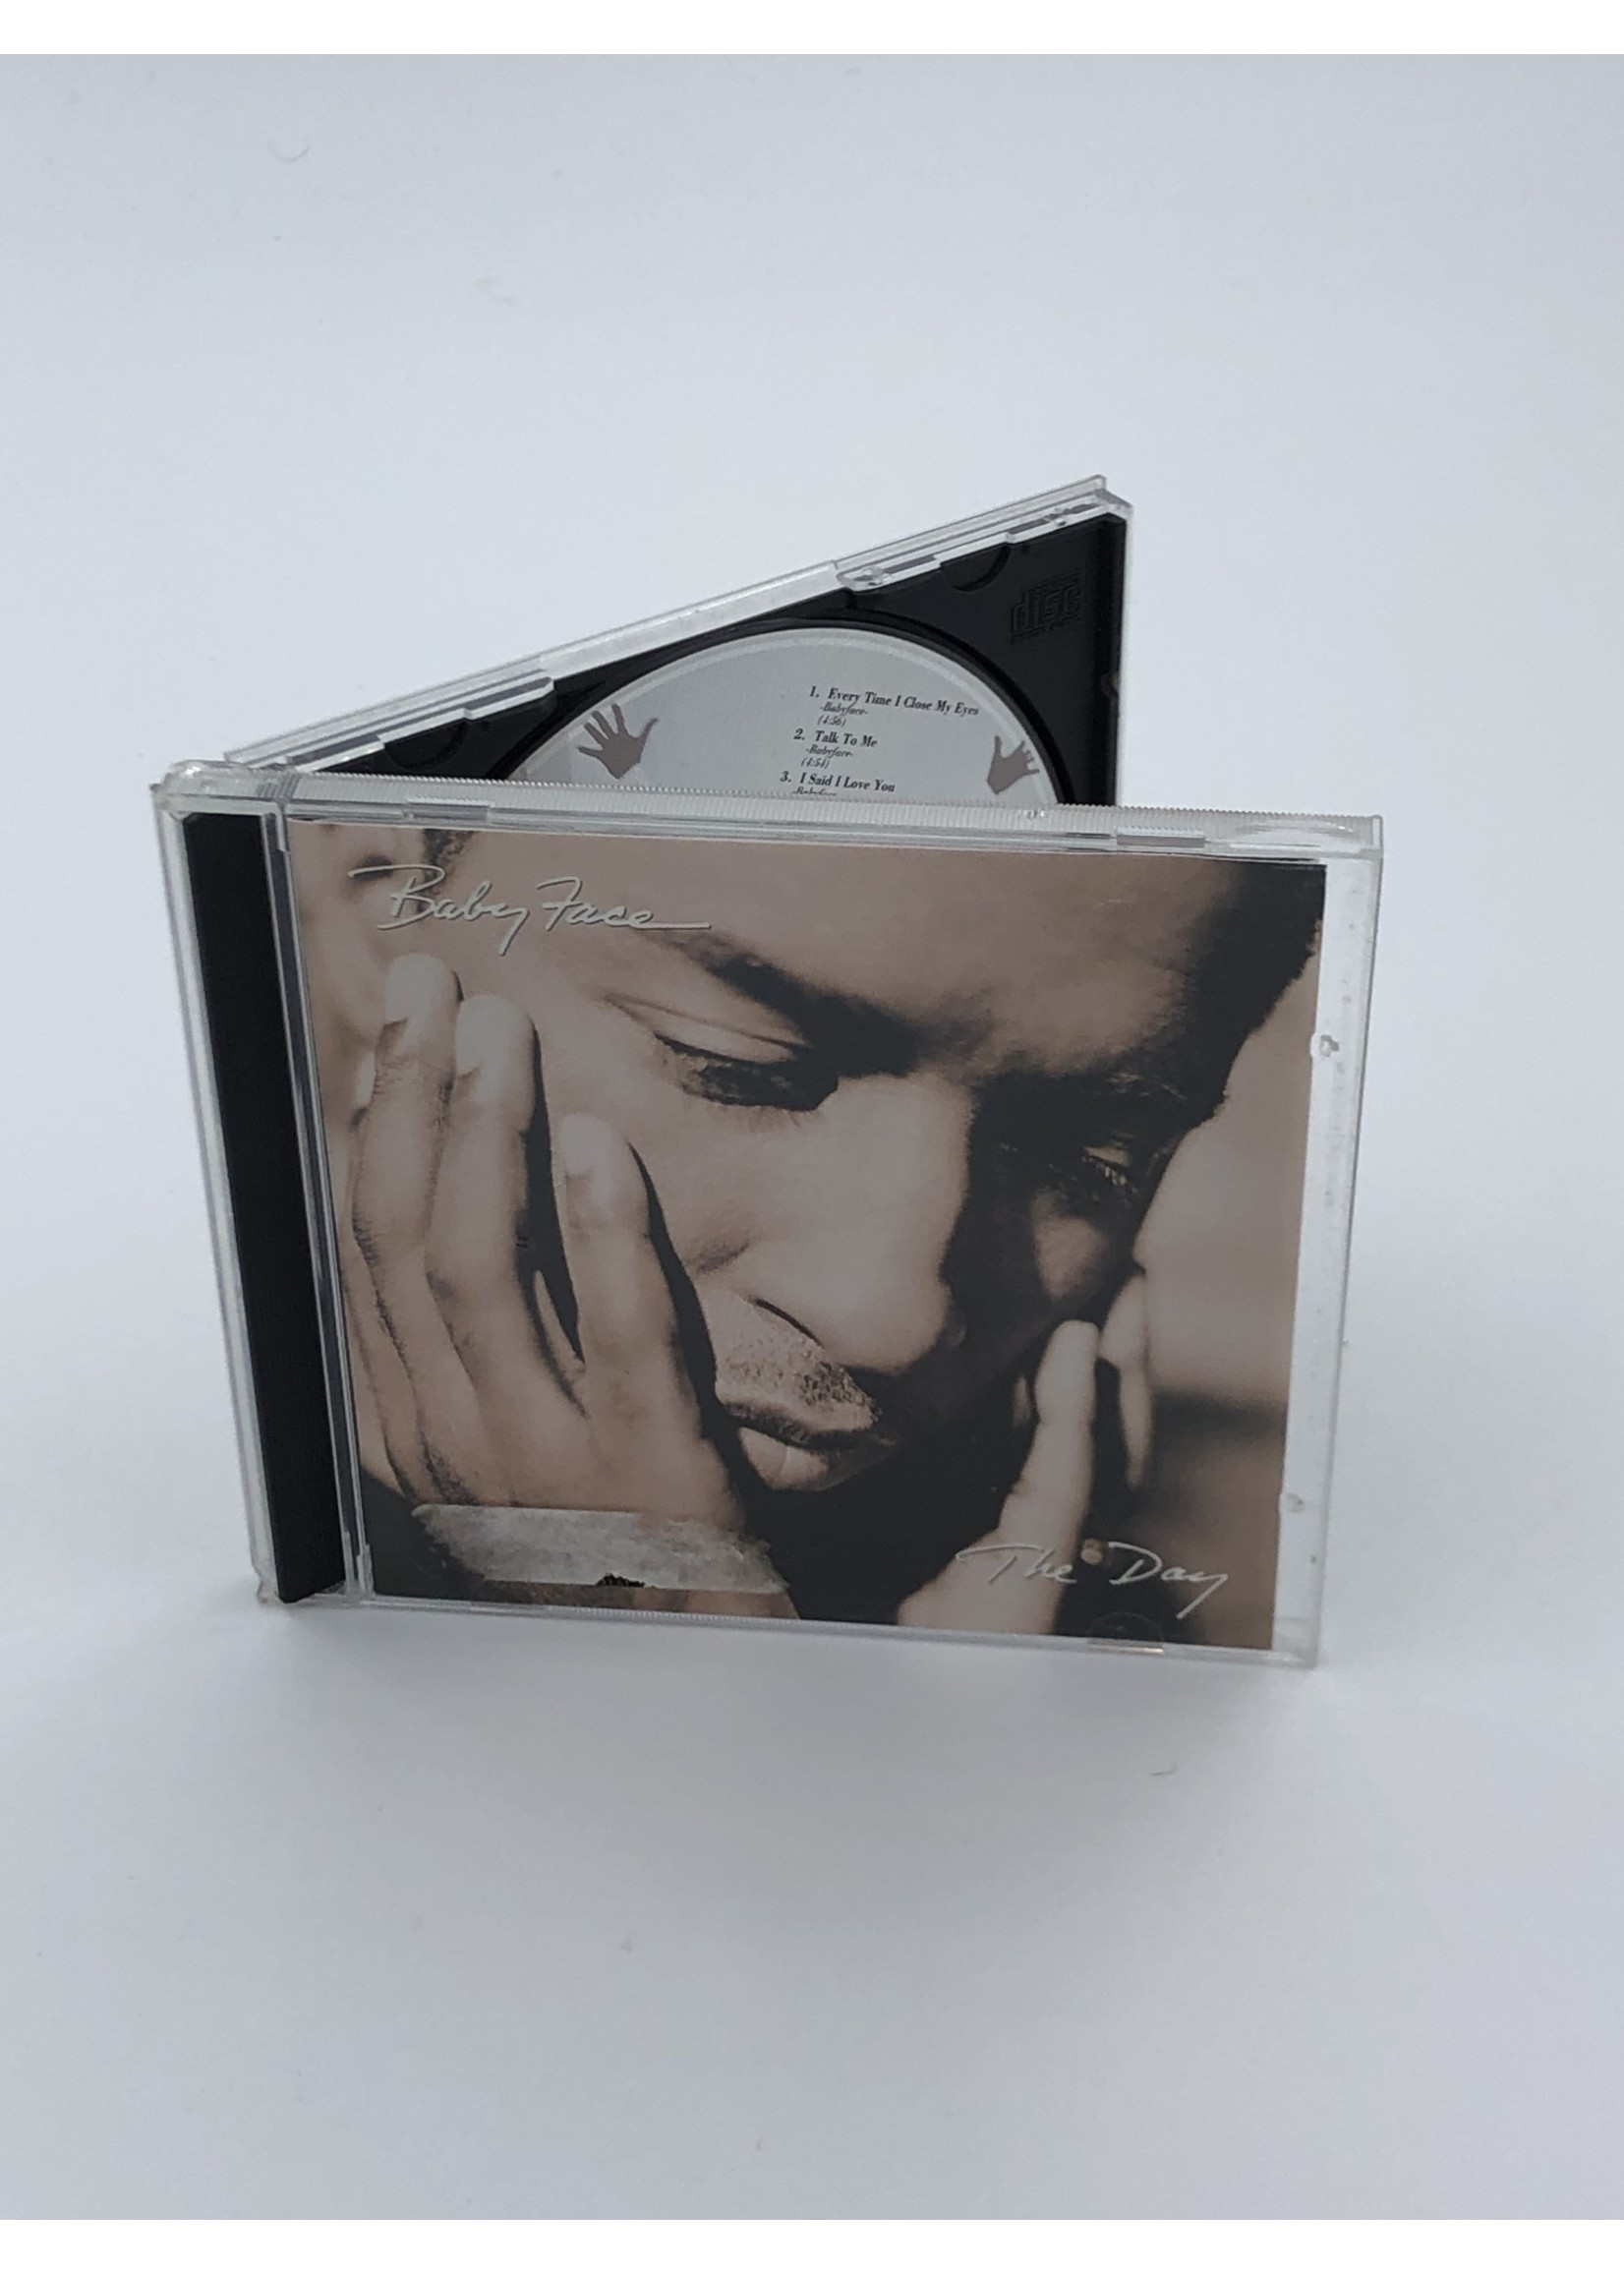 CD Babyface: The Day CD